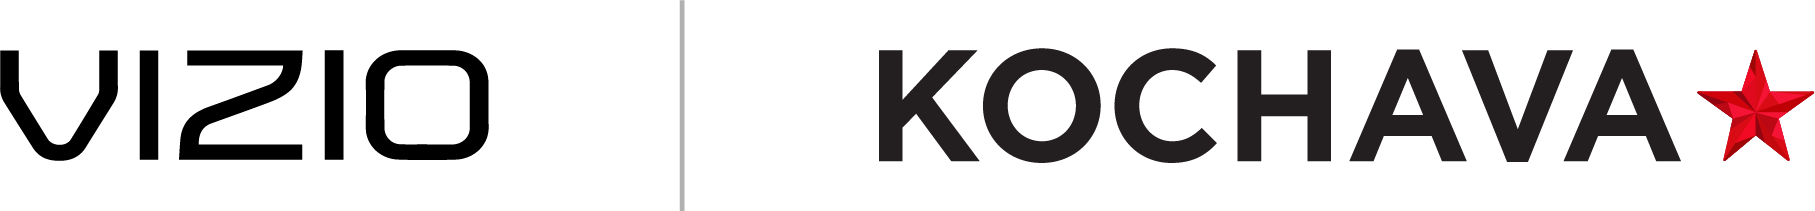 Vizio and Kochava logos